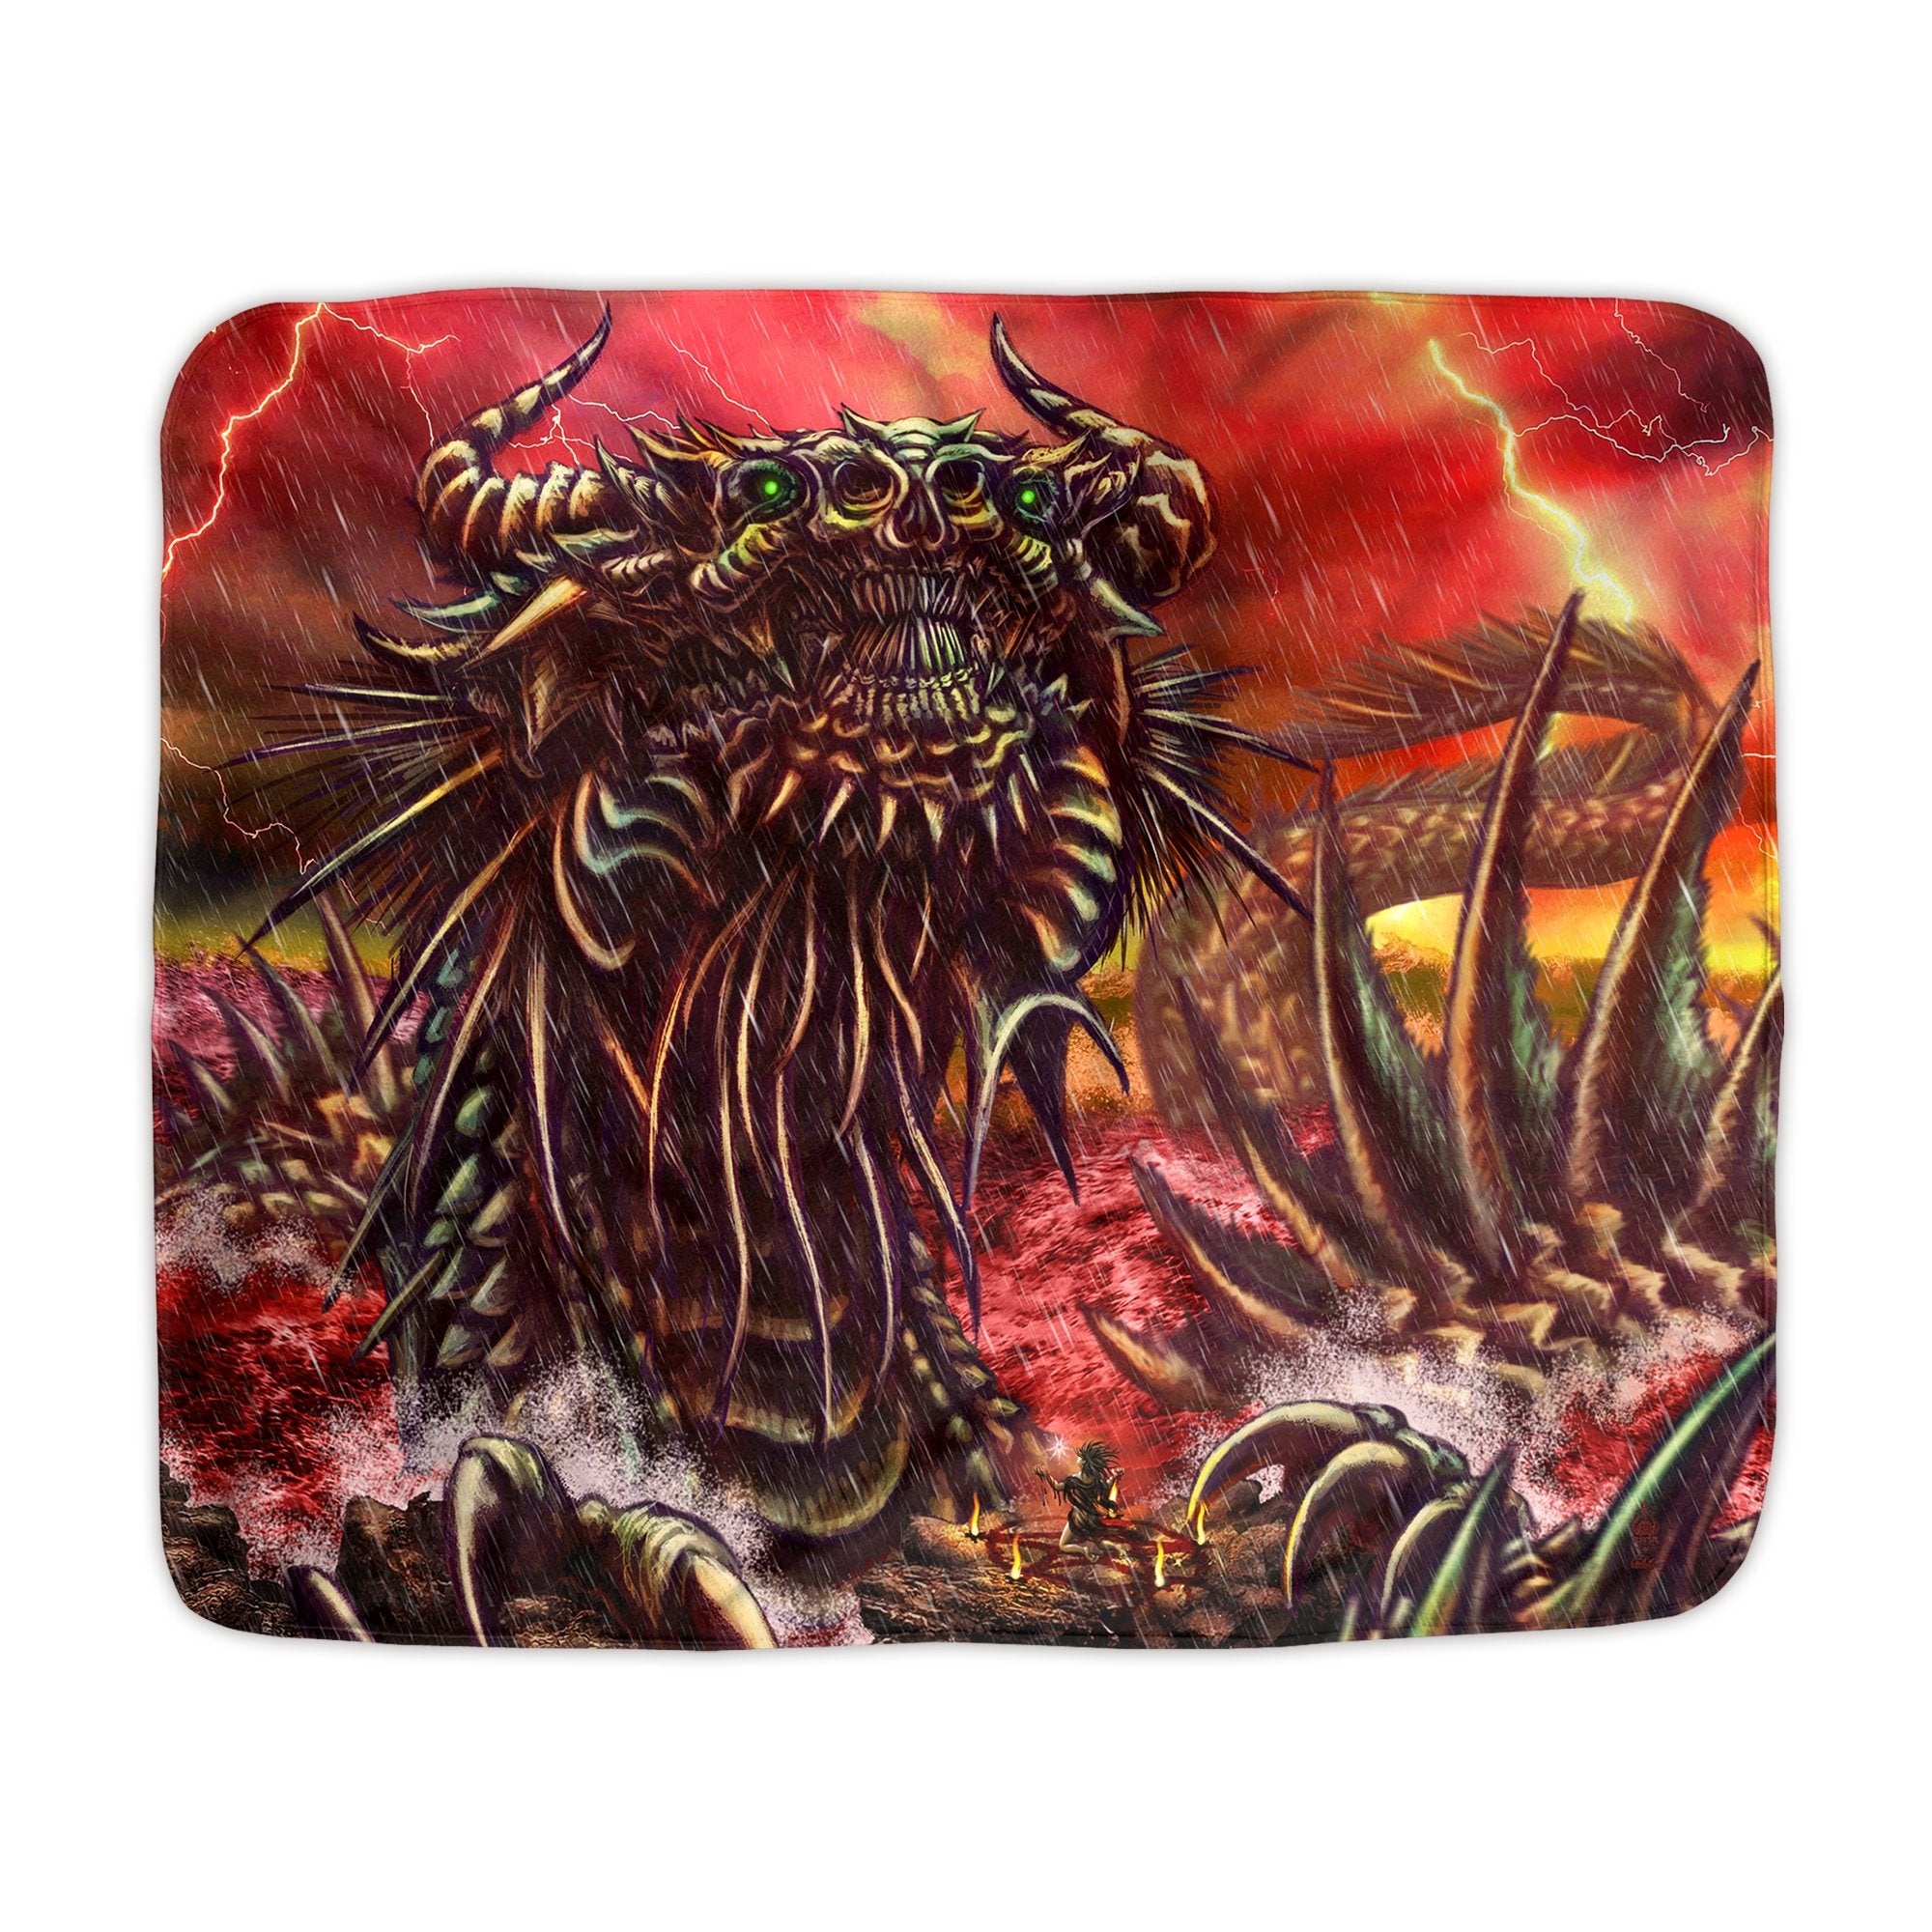 Leviathan Throw Fleece Blanket, Dark Fantasy, Demon Art, Satanic Home Decor - Red - Abysm Internal